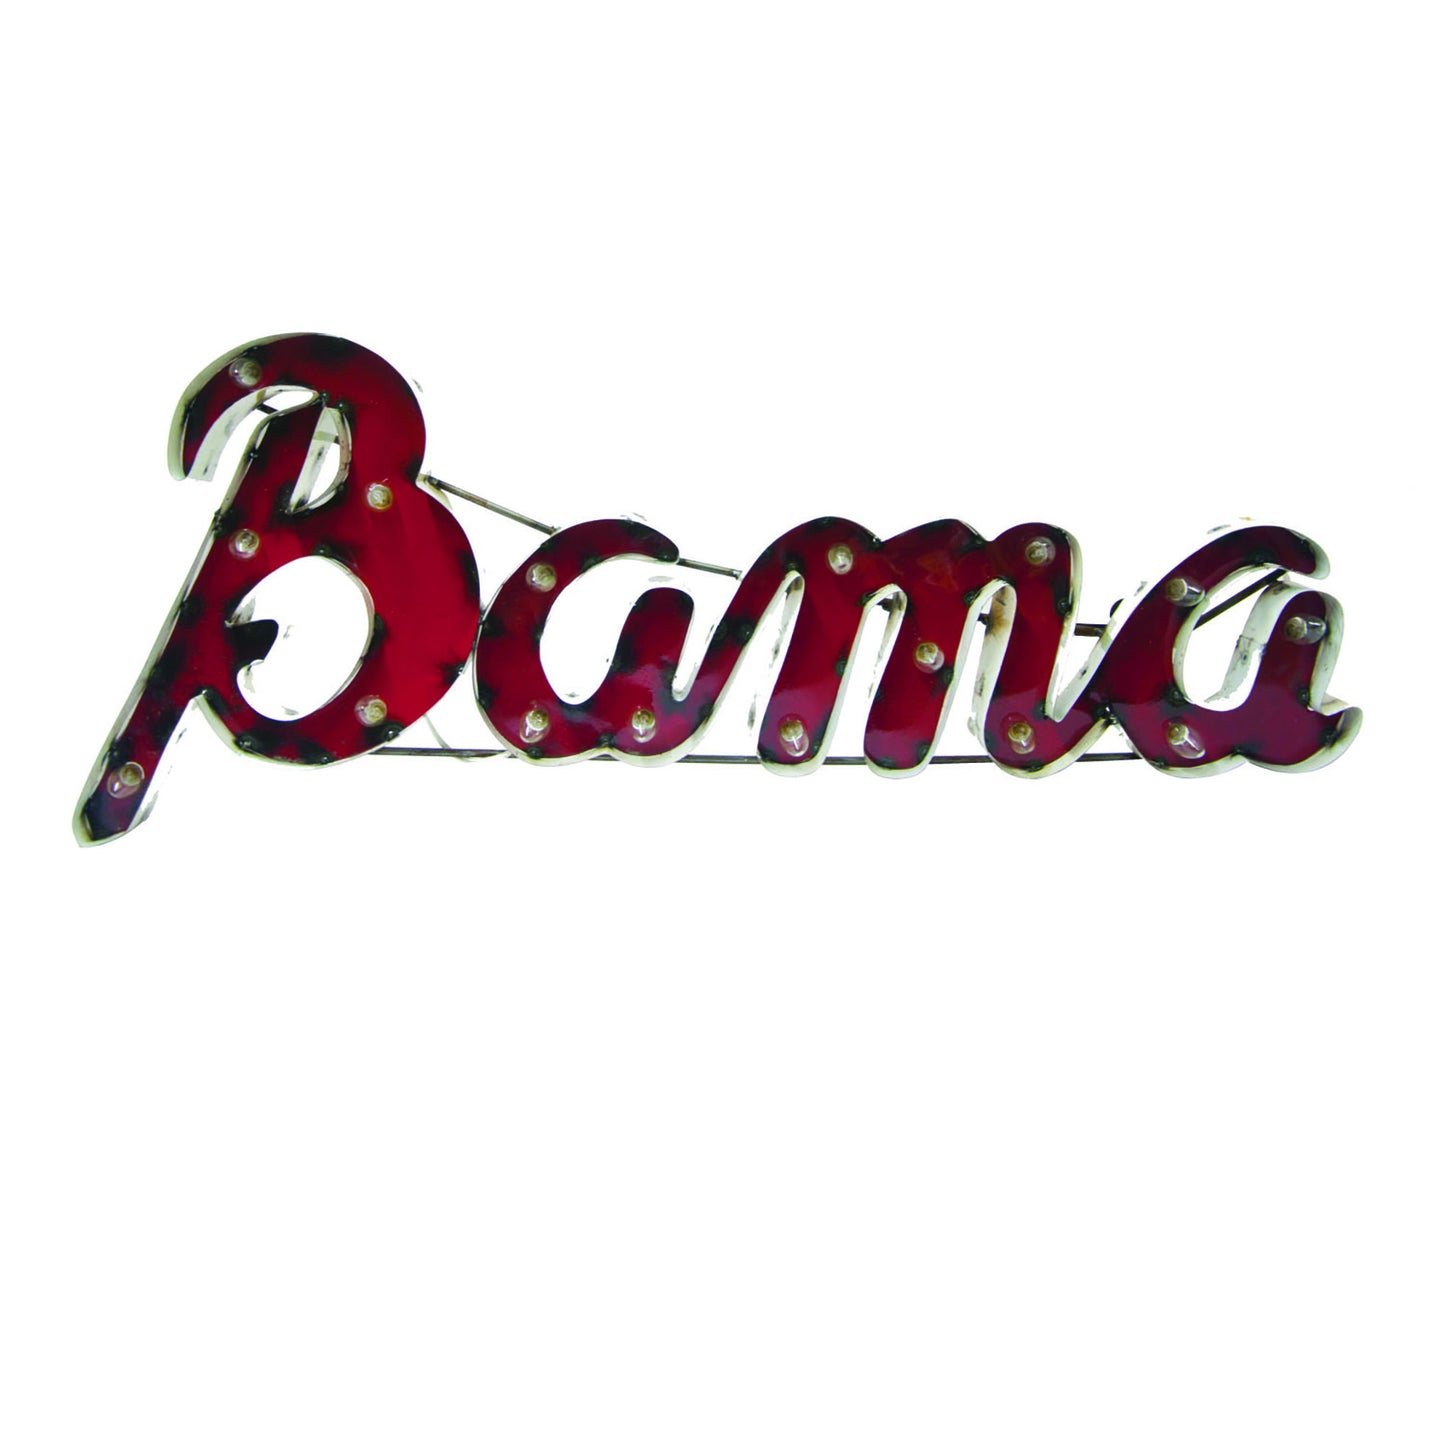 Alabama "Bama" Lighted Reycled Metal Wall Decor